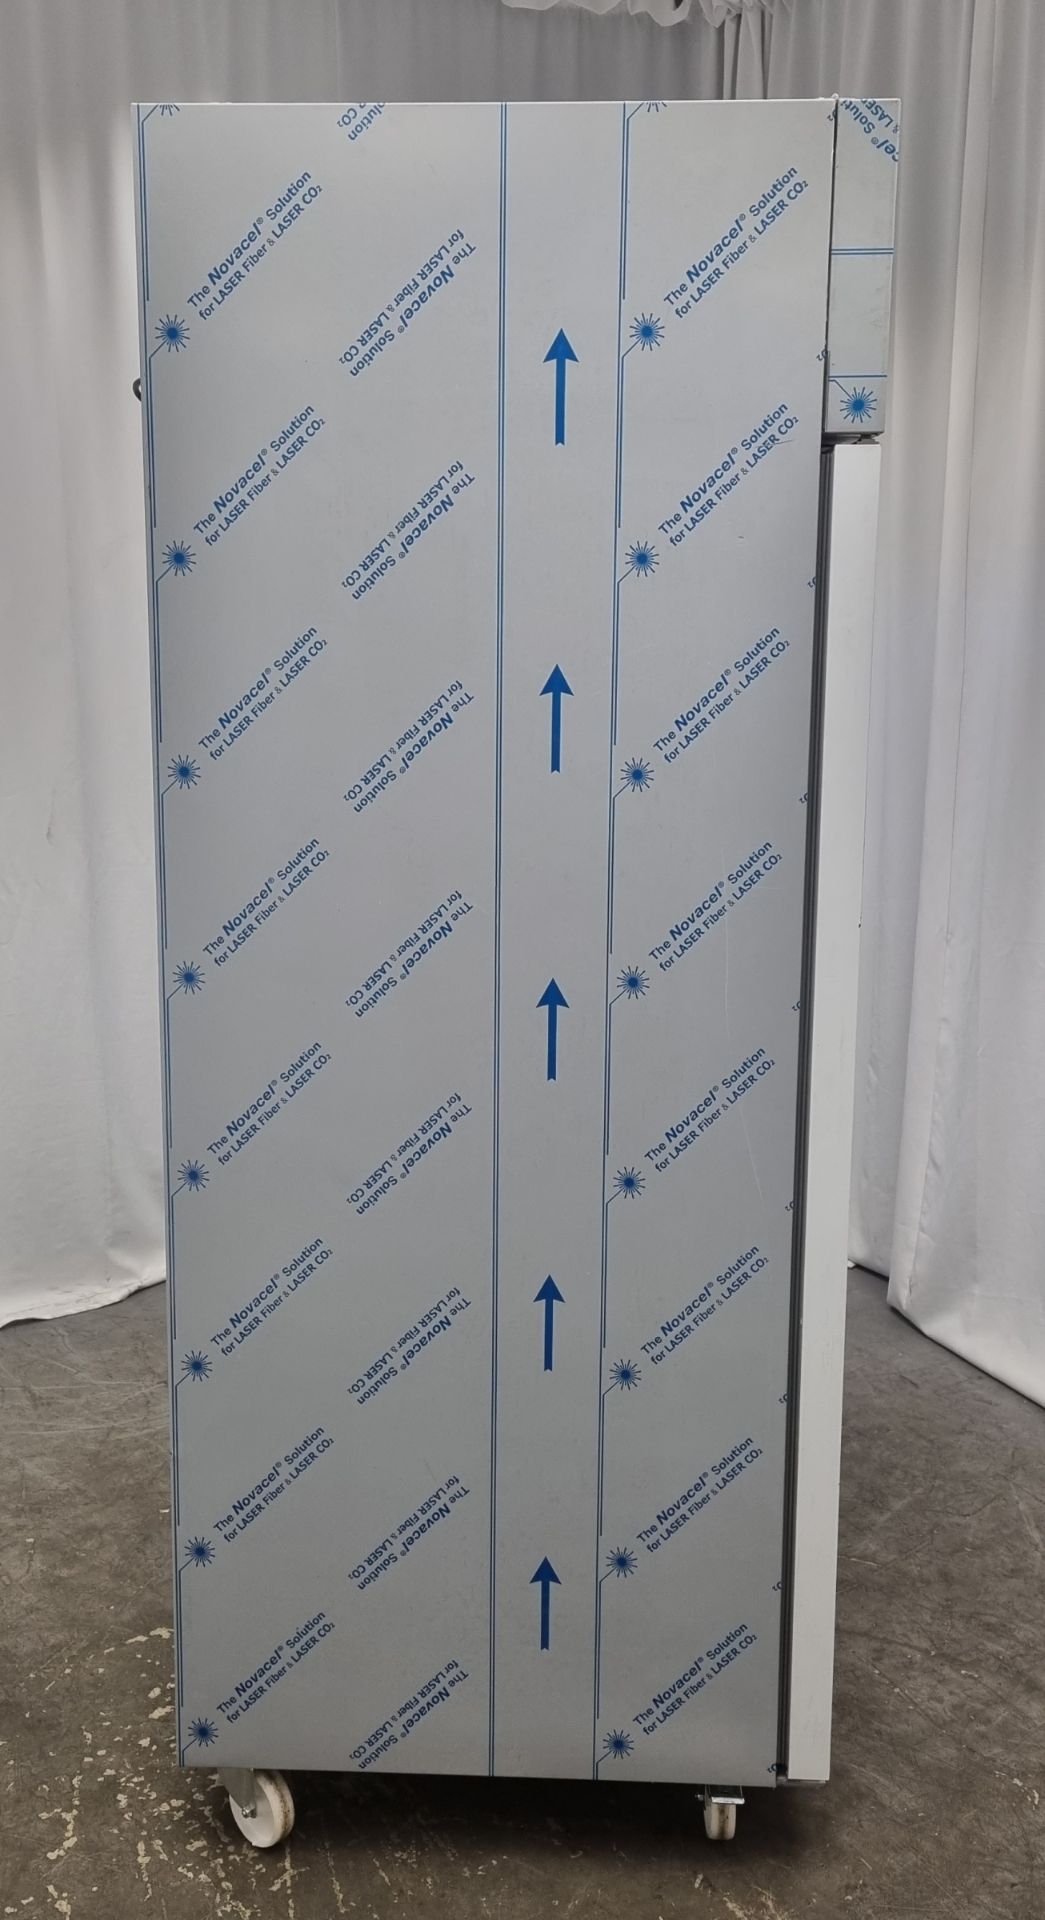 Iceinox VTS 1340 CR stainless steel upright, double door refrigerator - Image 11 of 11